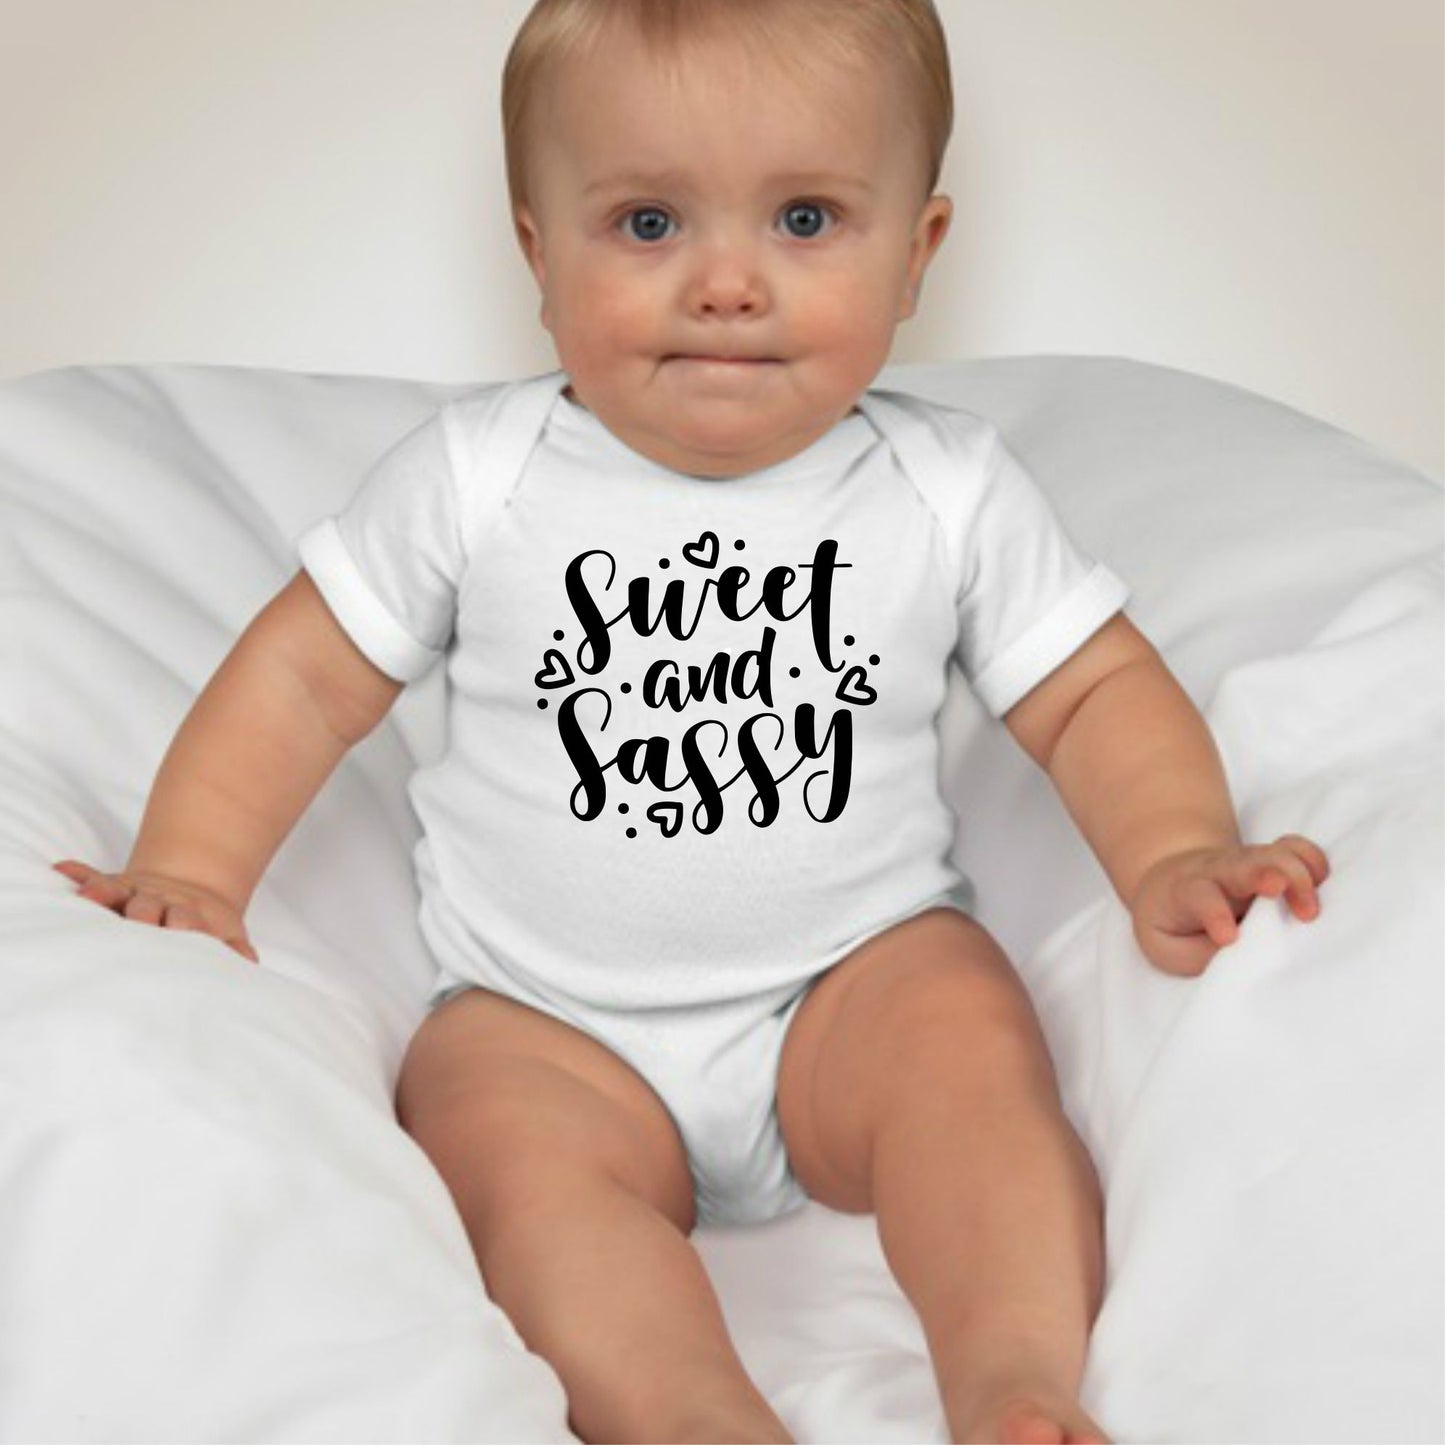 Baby Statement Onesies - Sweet and Sassy